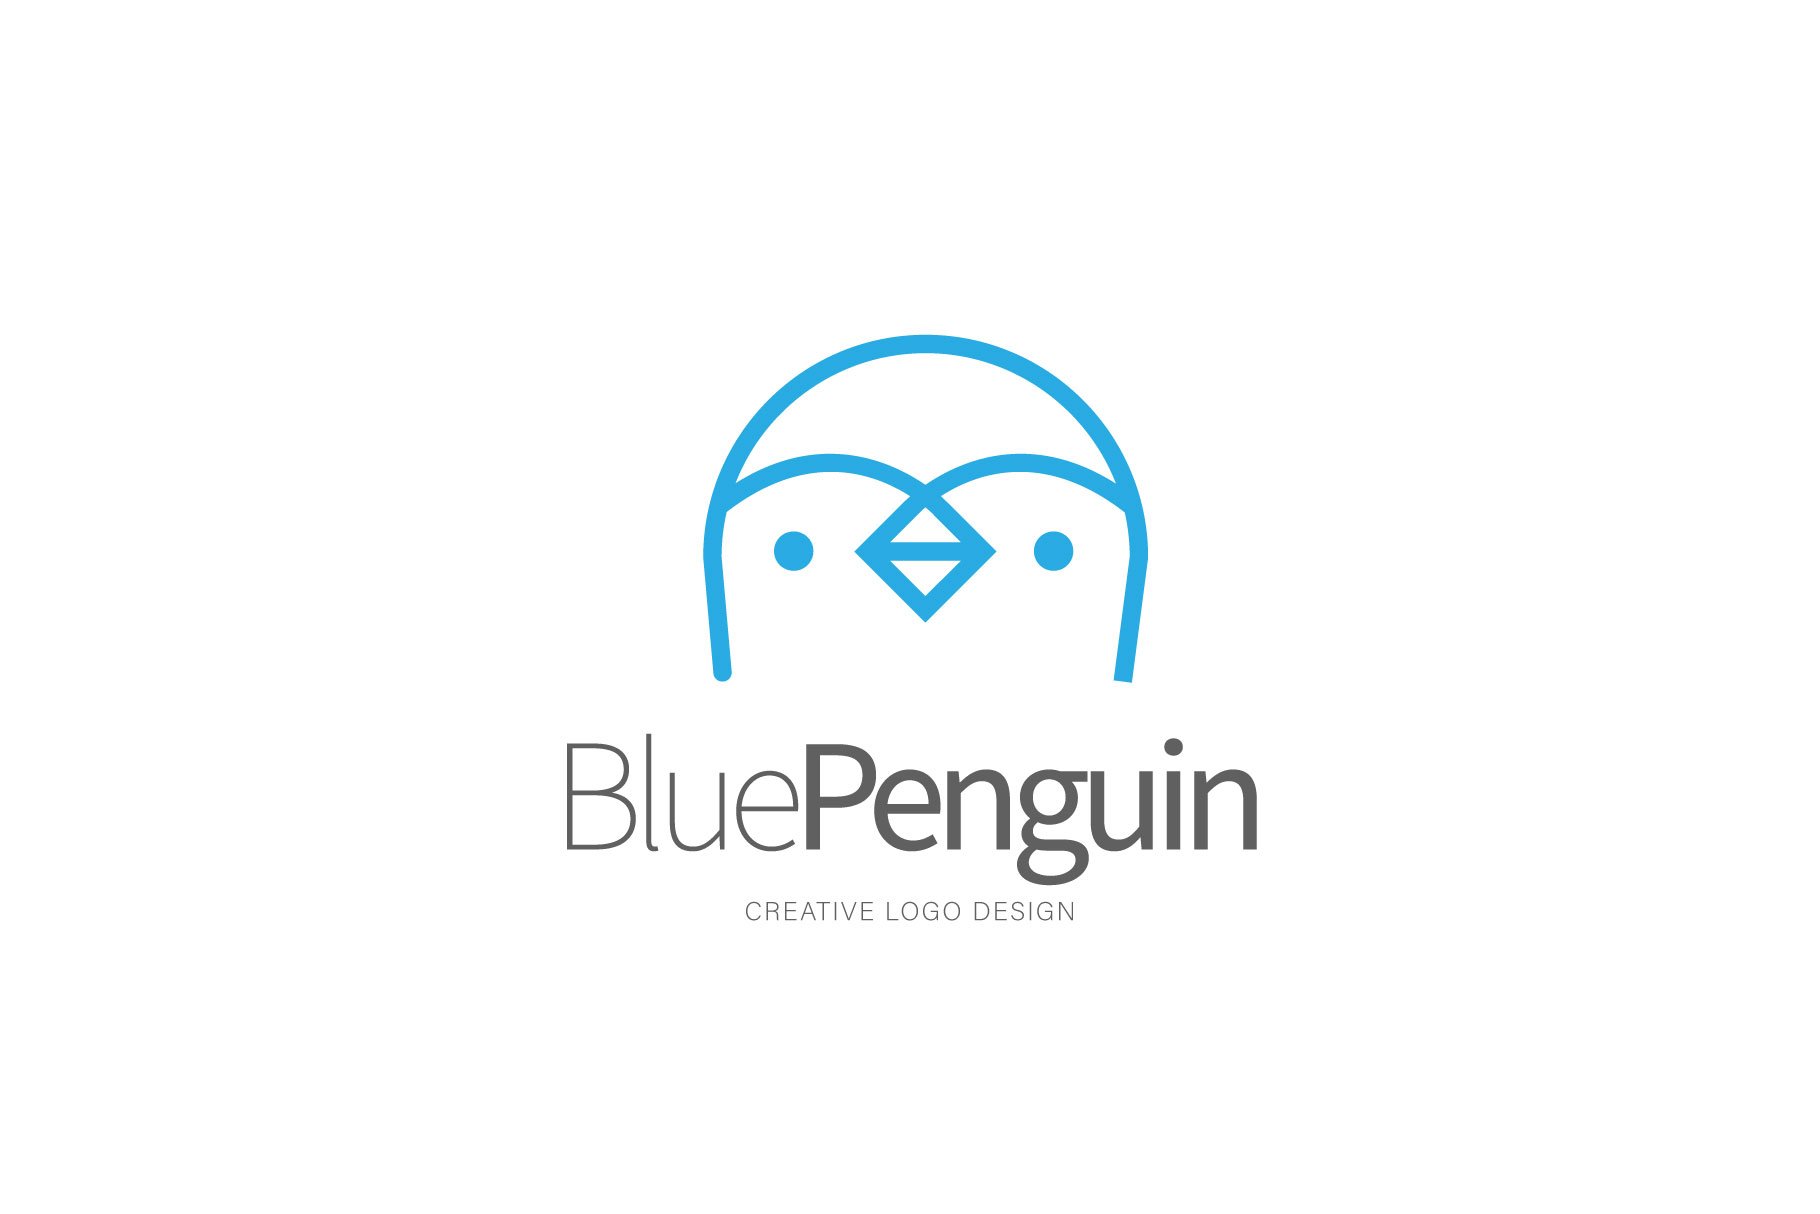 Penguin logo cover image.